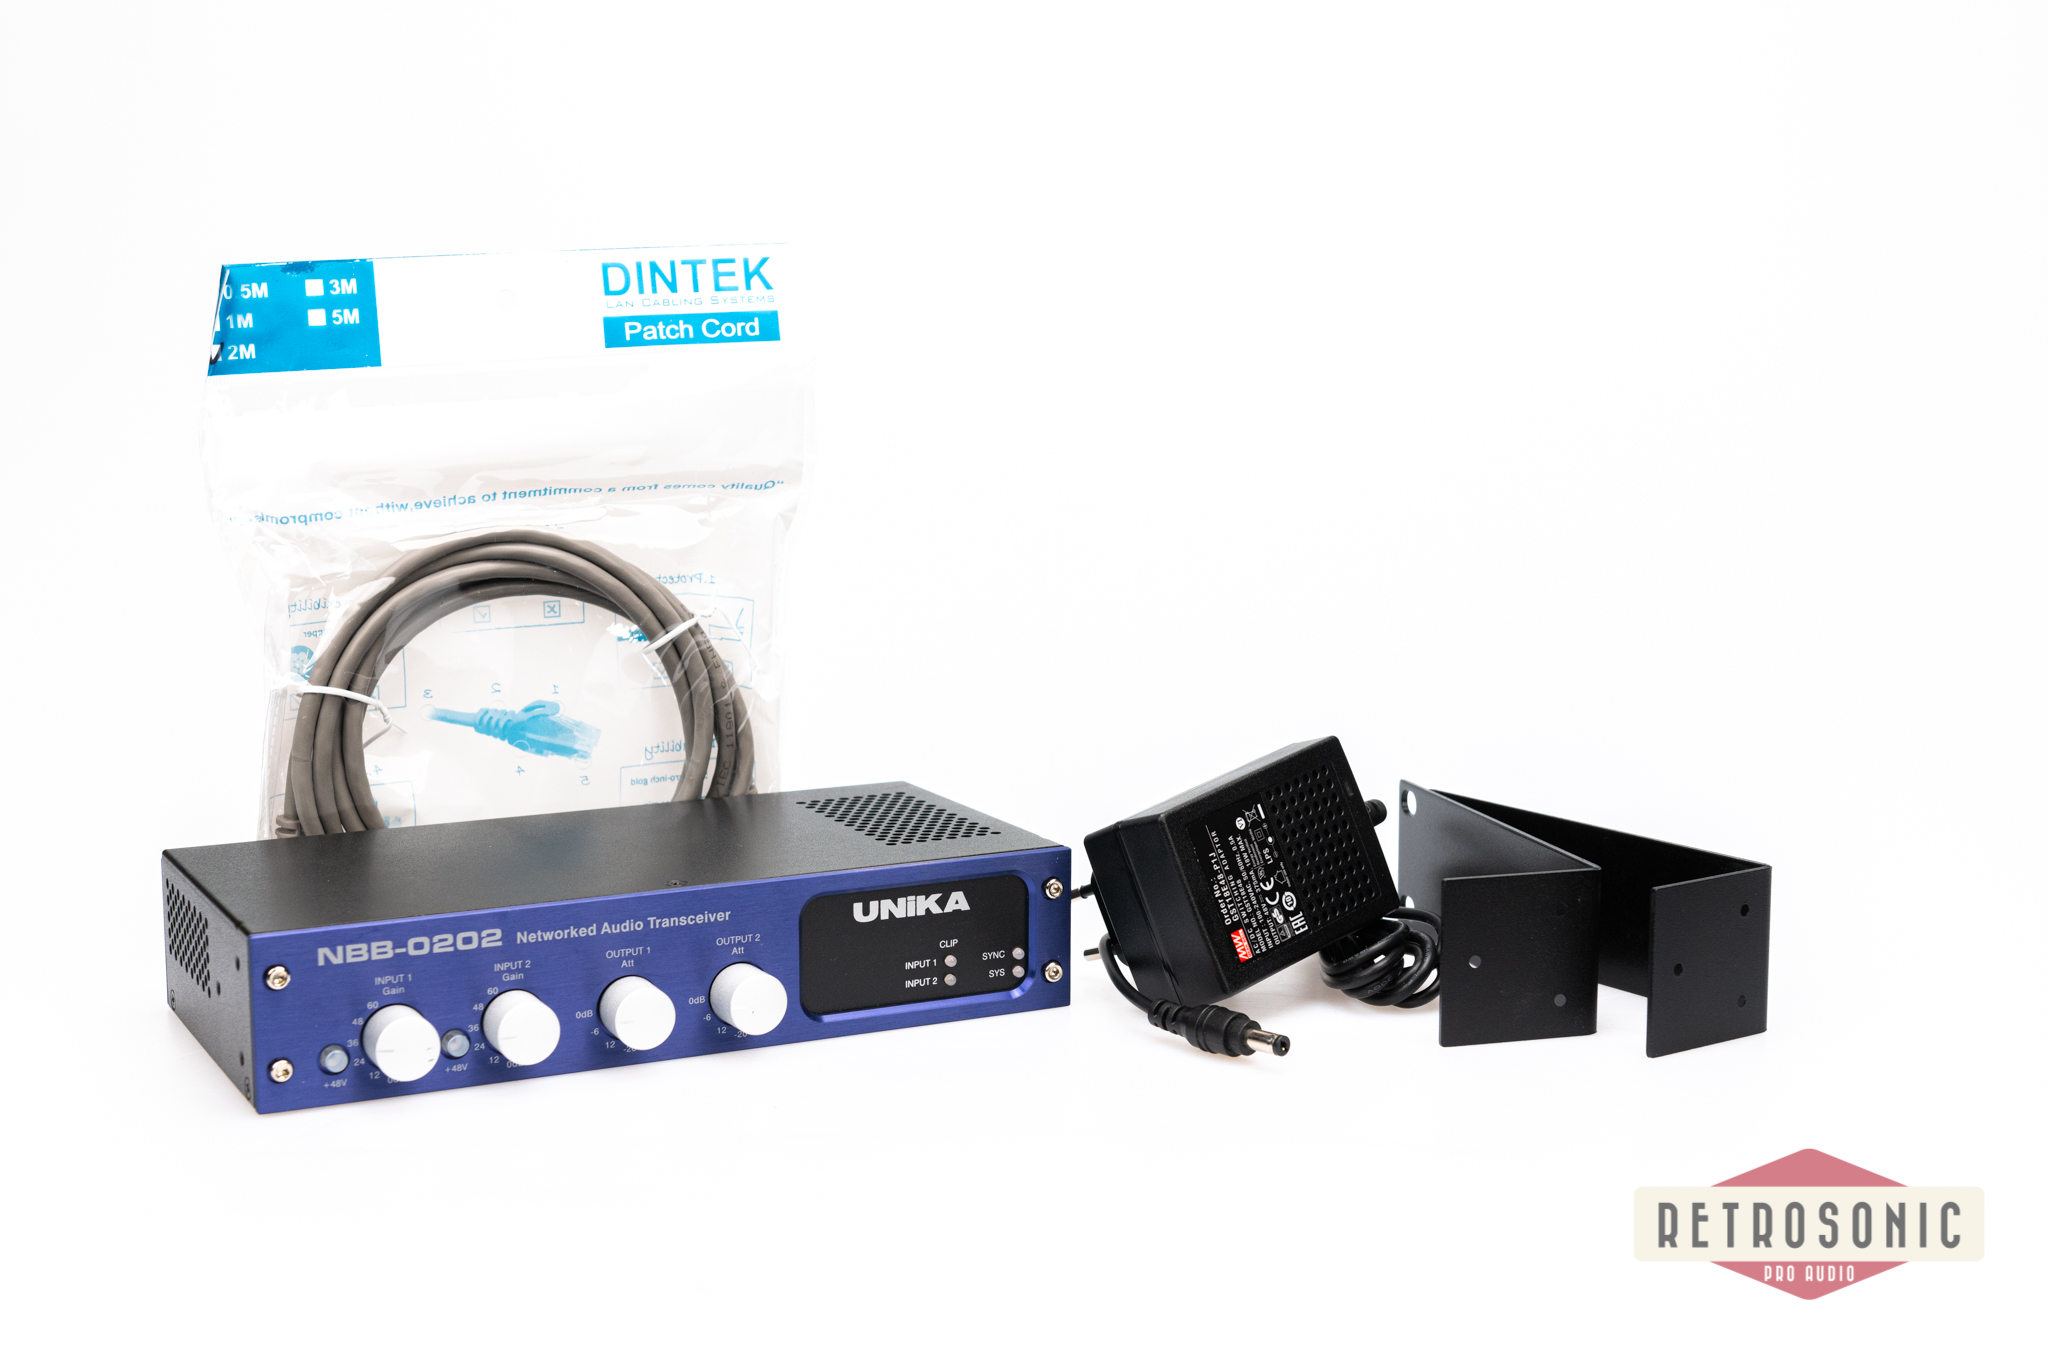 Unika NBB-0202 Bi-directional 2 ch Mic/Line Dante-Interface